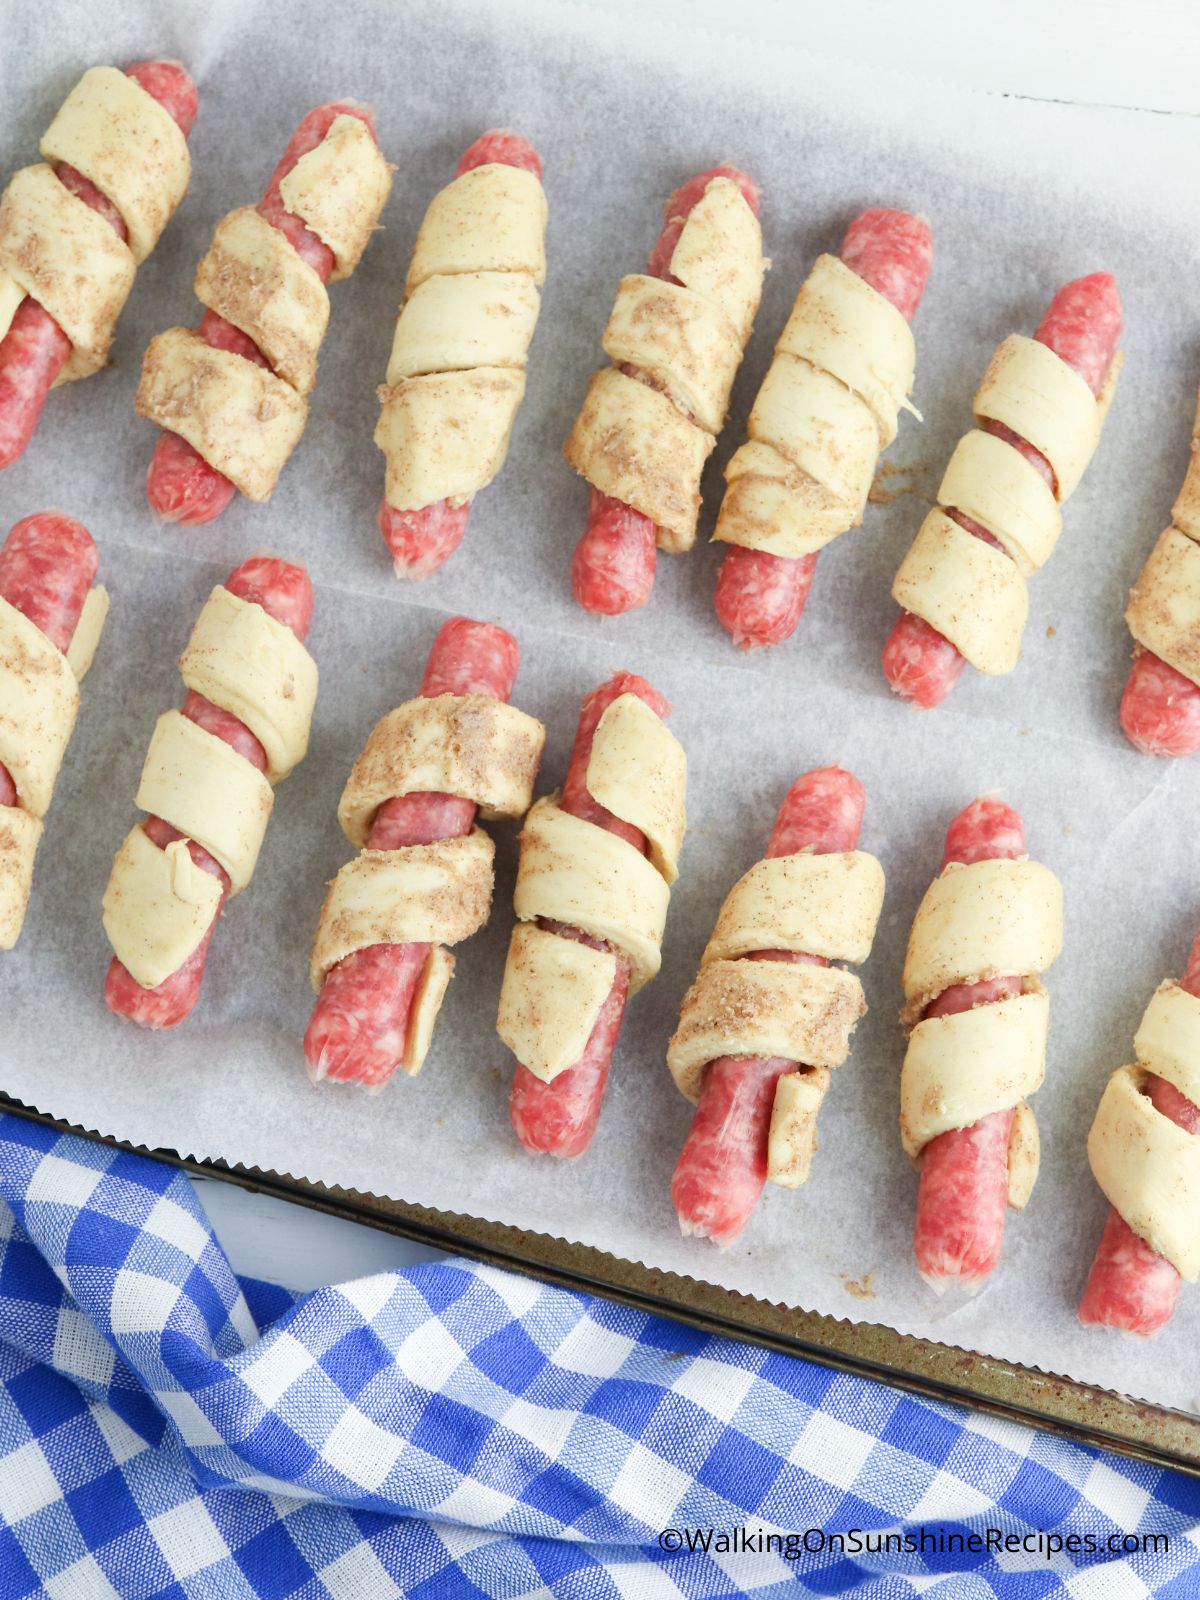 wrap cinnamon rolls around breakfast sausage links.